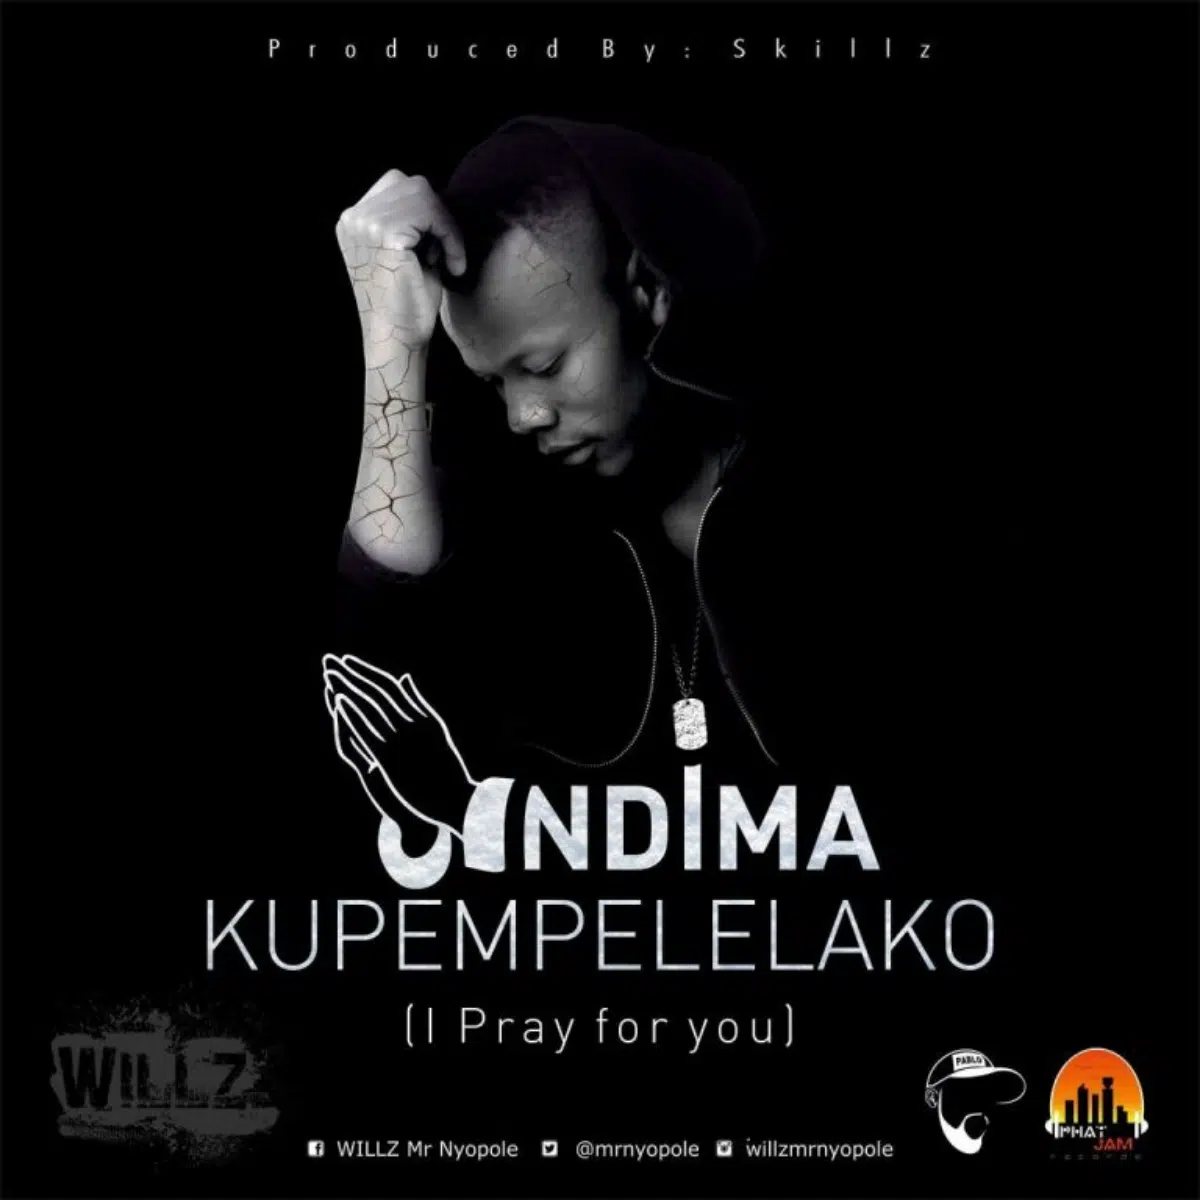 DOWNLOAD: Willz – “Ndimaku Pempelelako” (I Pray For You) Mp3